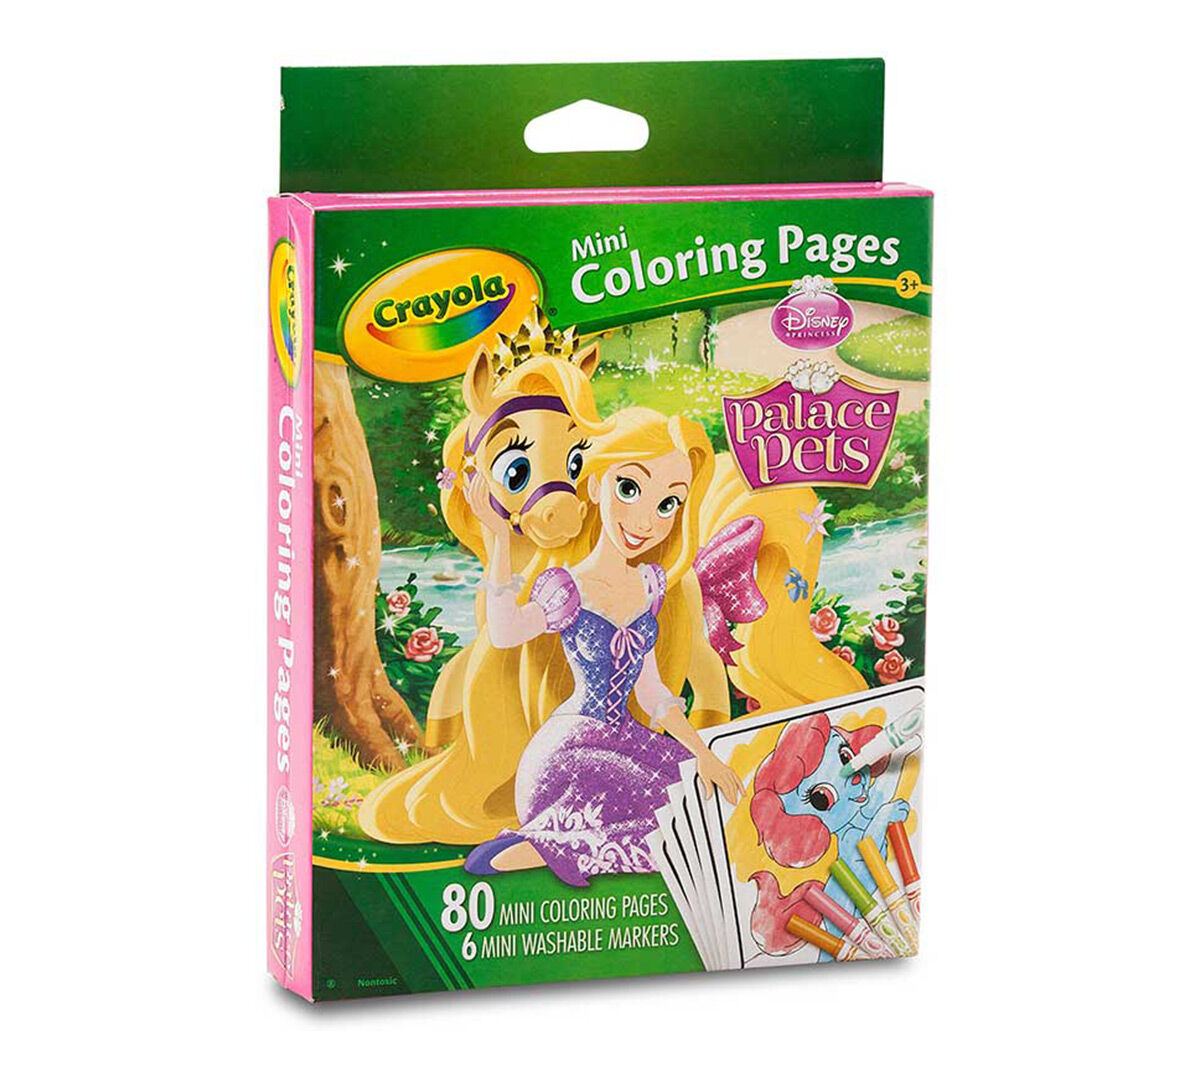 Download Mini Coloring Pages Disney Princess Palace Pets - Crayola